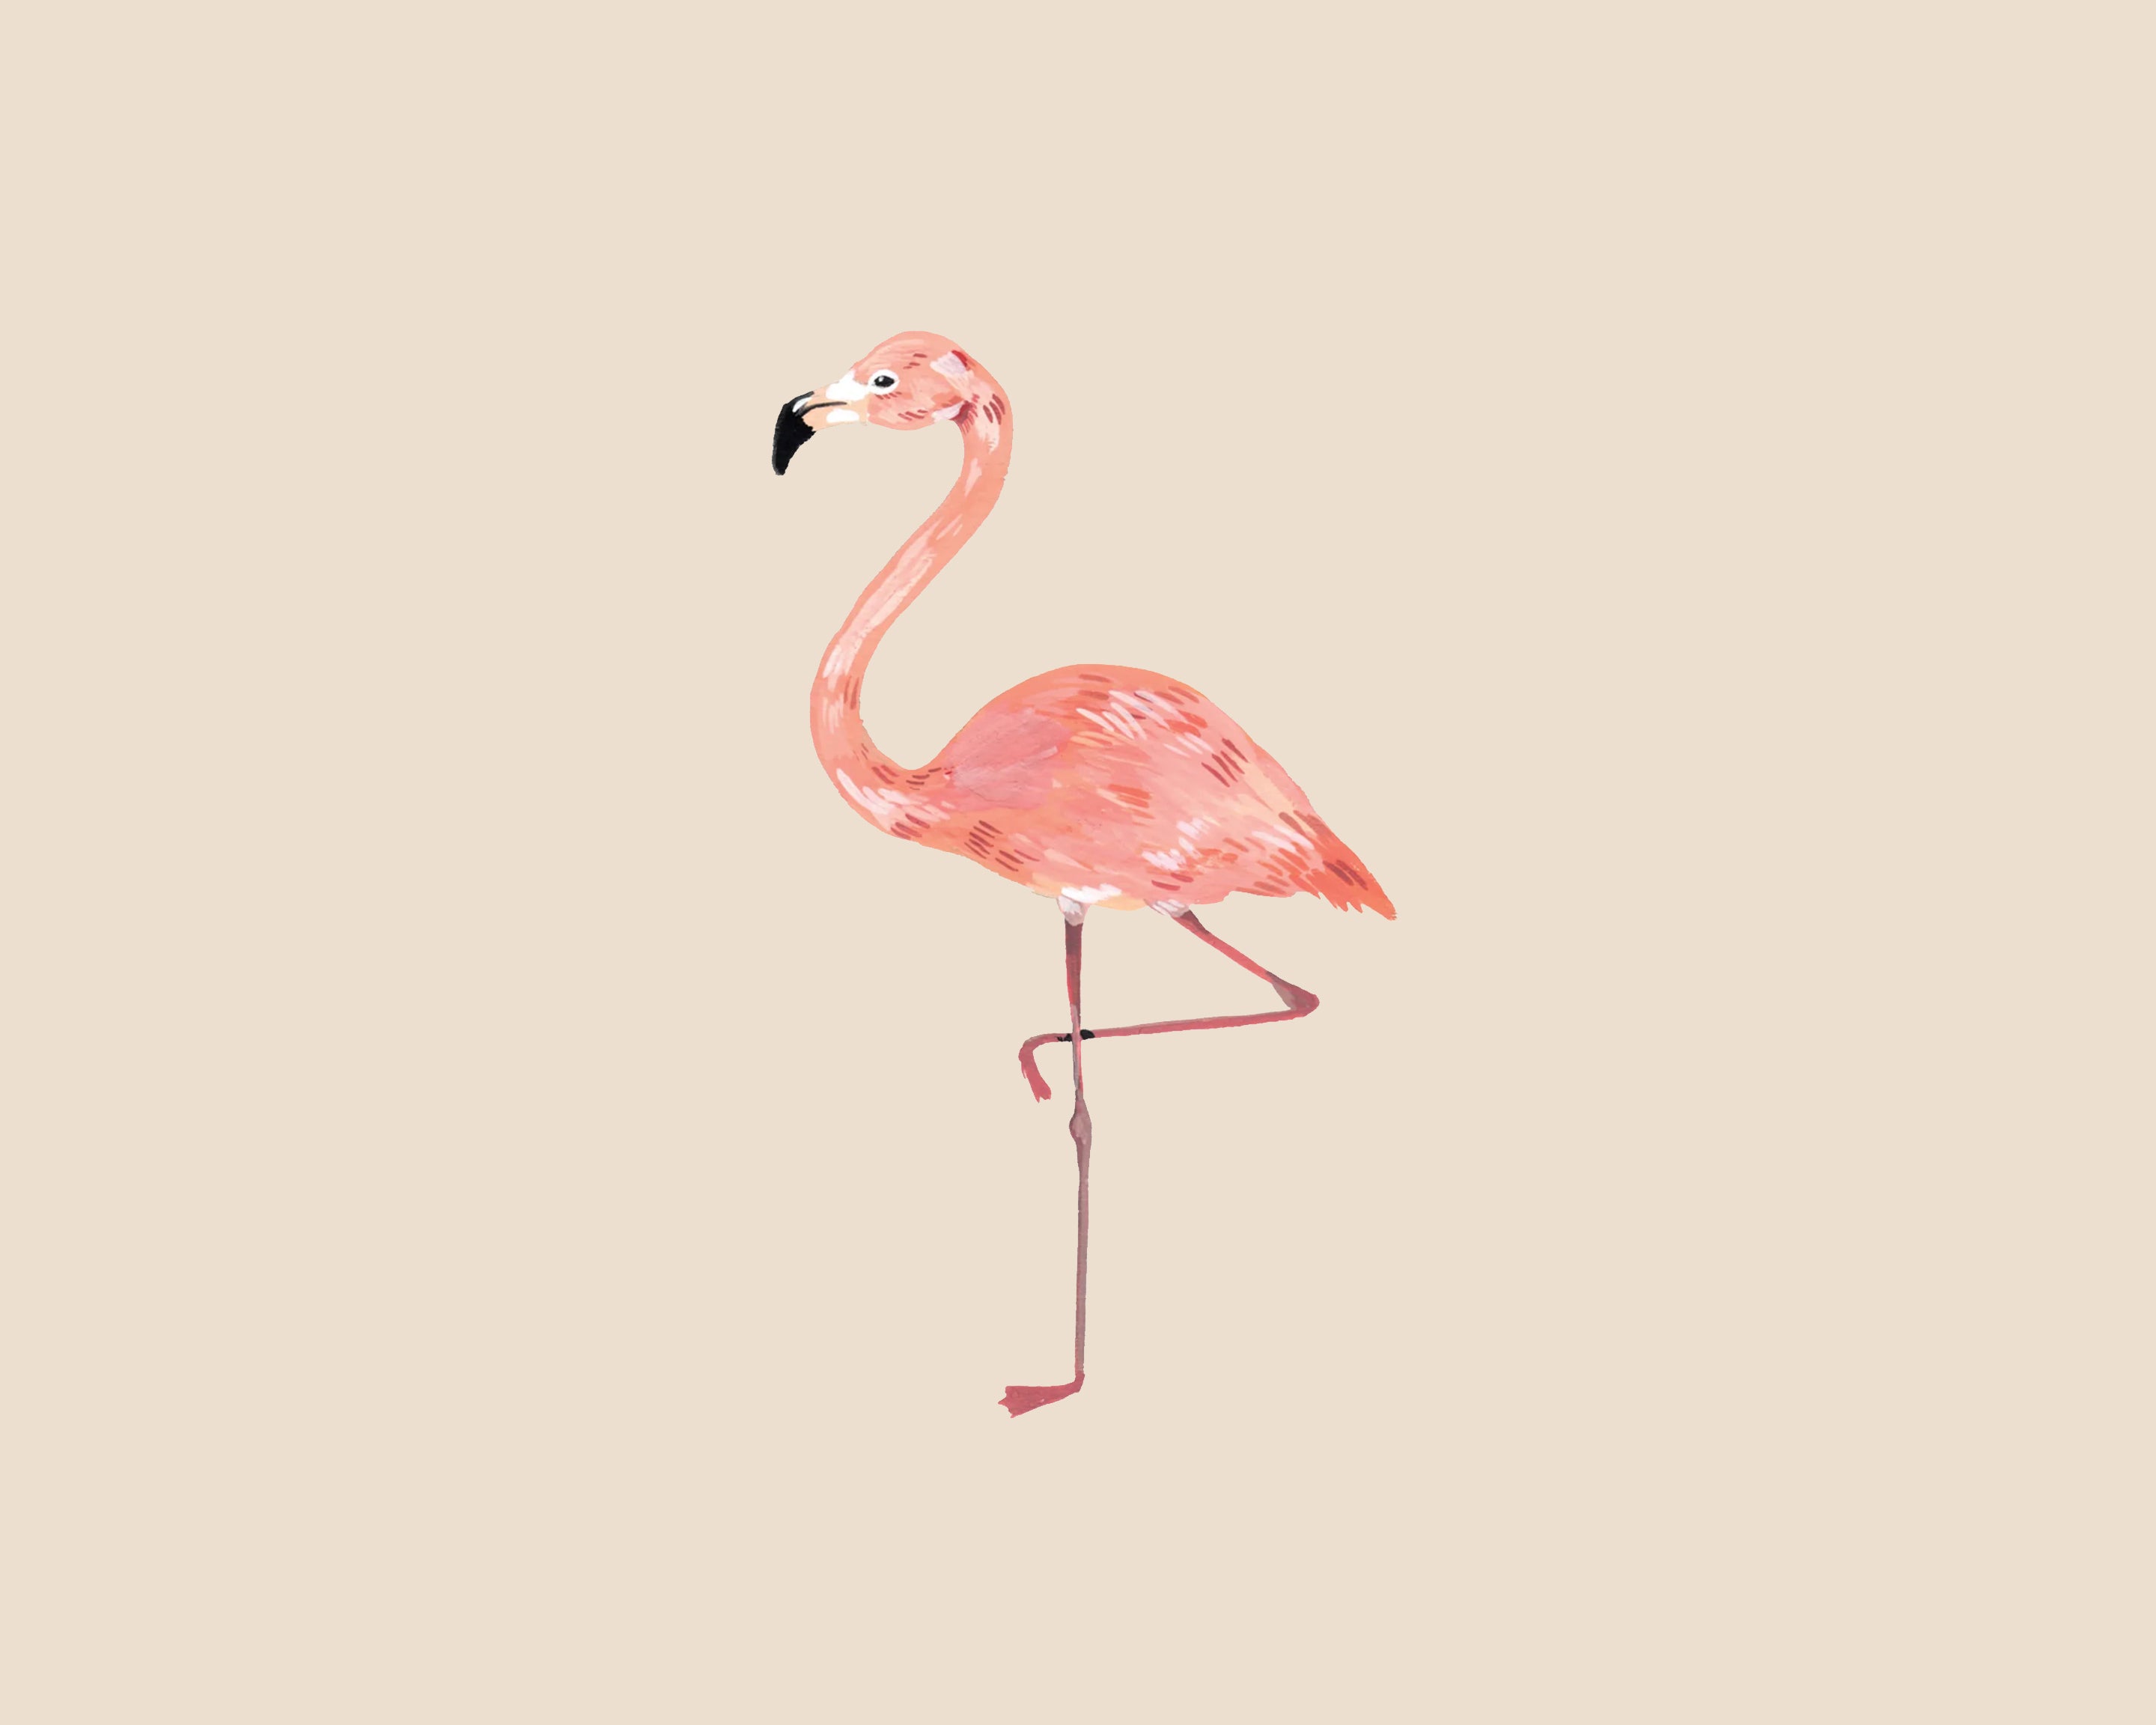 Bird head flamingo tattoo isolated Royalty Free Vector Image